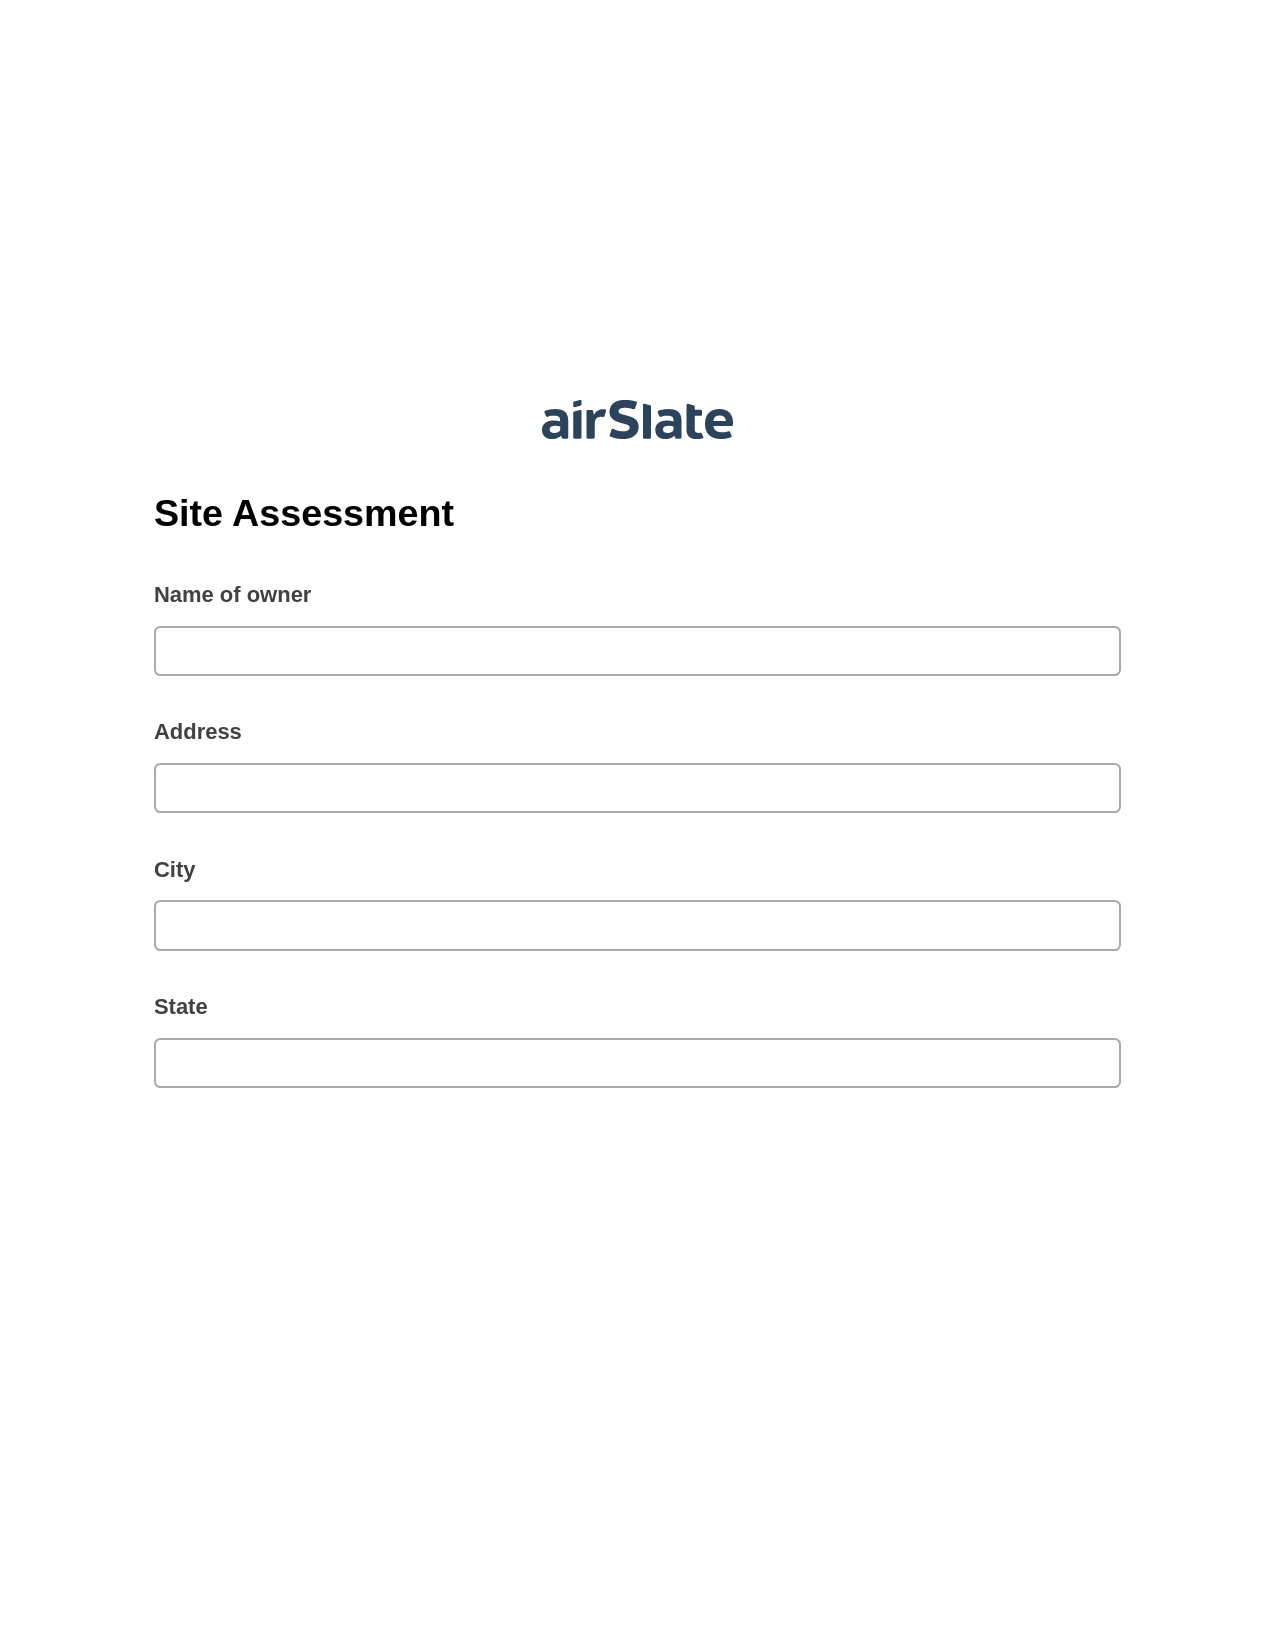 Site Assessment Pre-fill from Google Sheet Dropdown Options Bot, Assign Slate Name Bot, Slack Notification Postfinish Bot